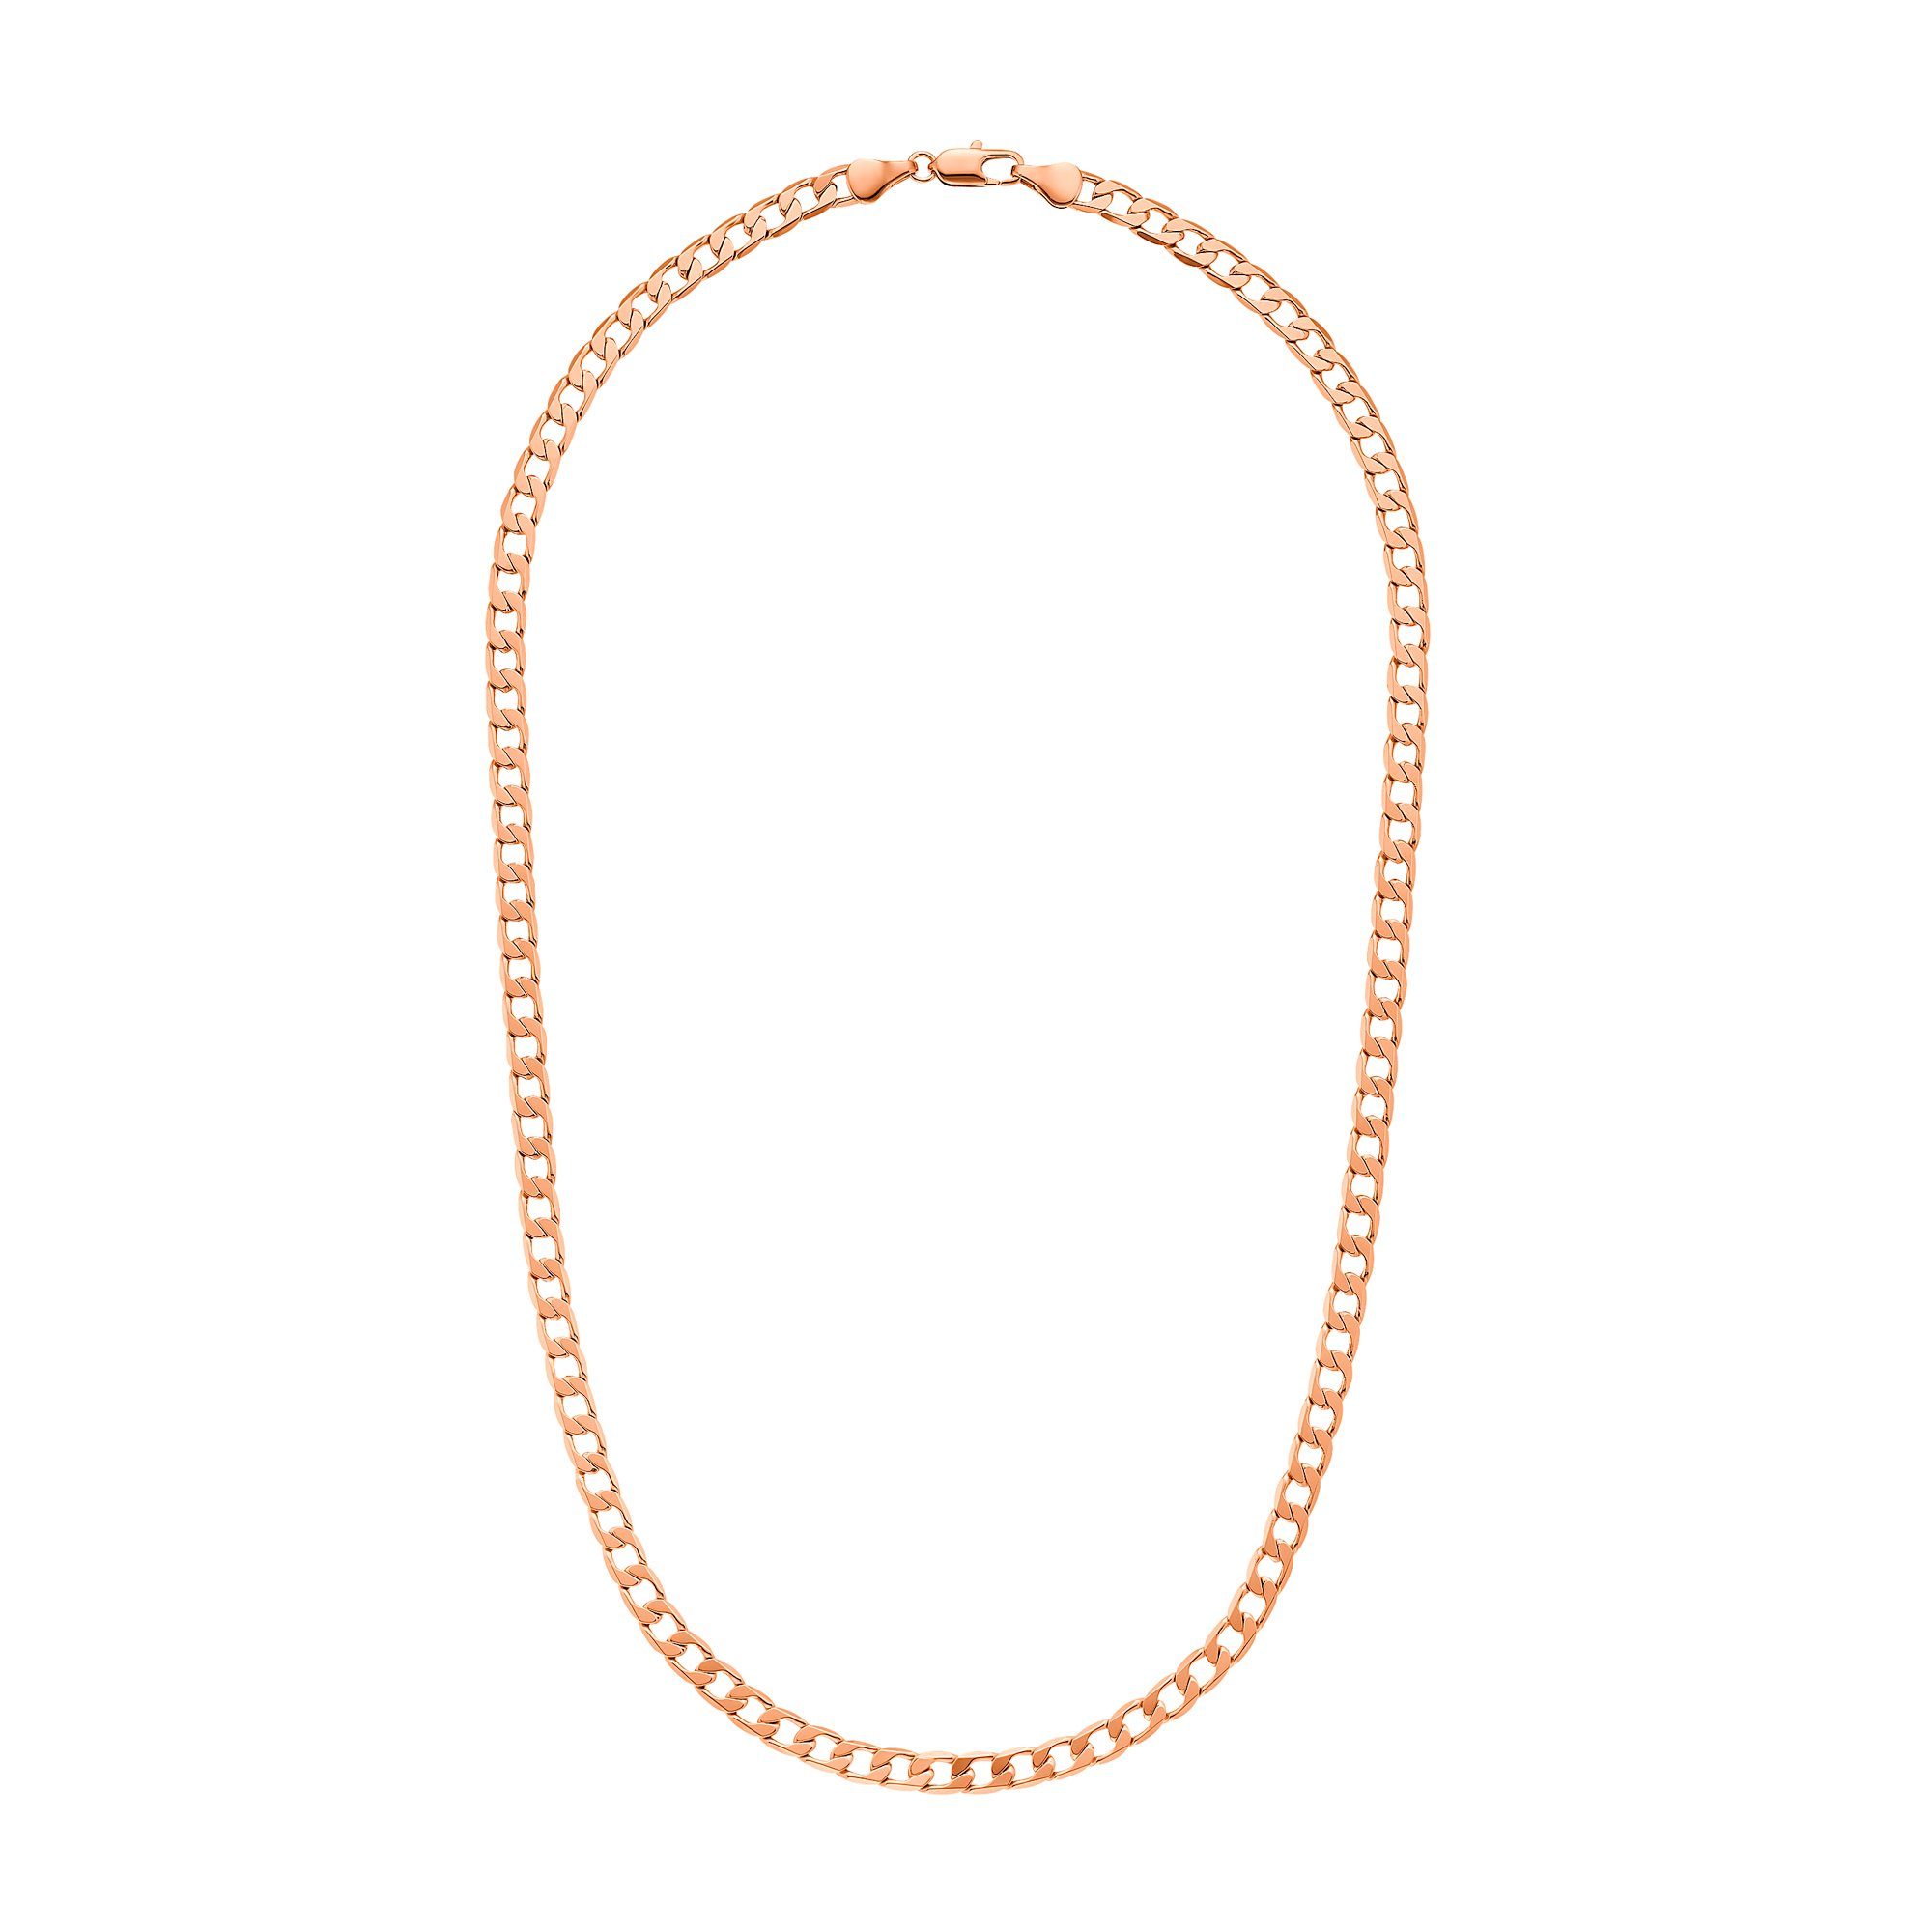 Heideman Collier Mona goldfarben (inkl. Geschenkverpackung), Halskette Frauen rosegoldfarben